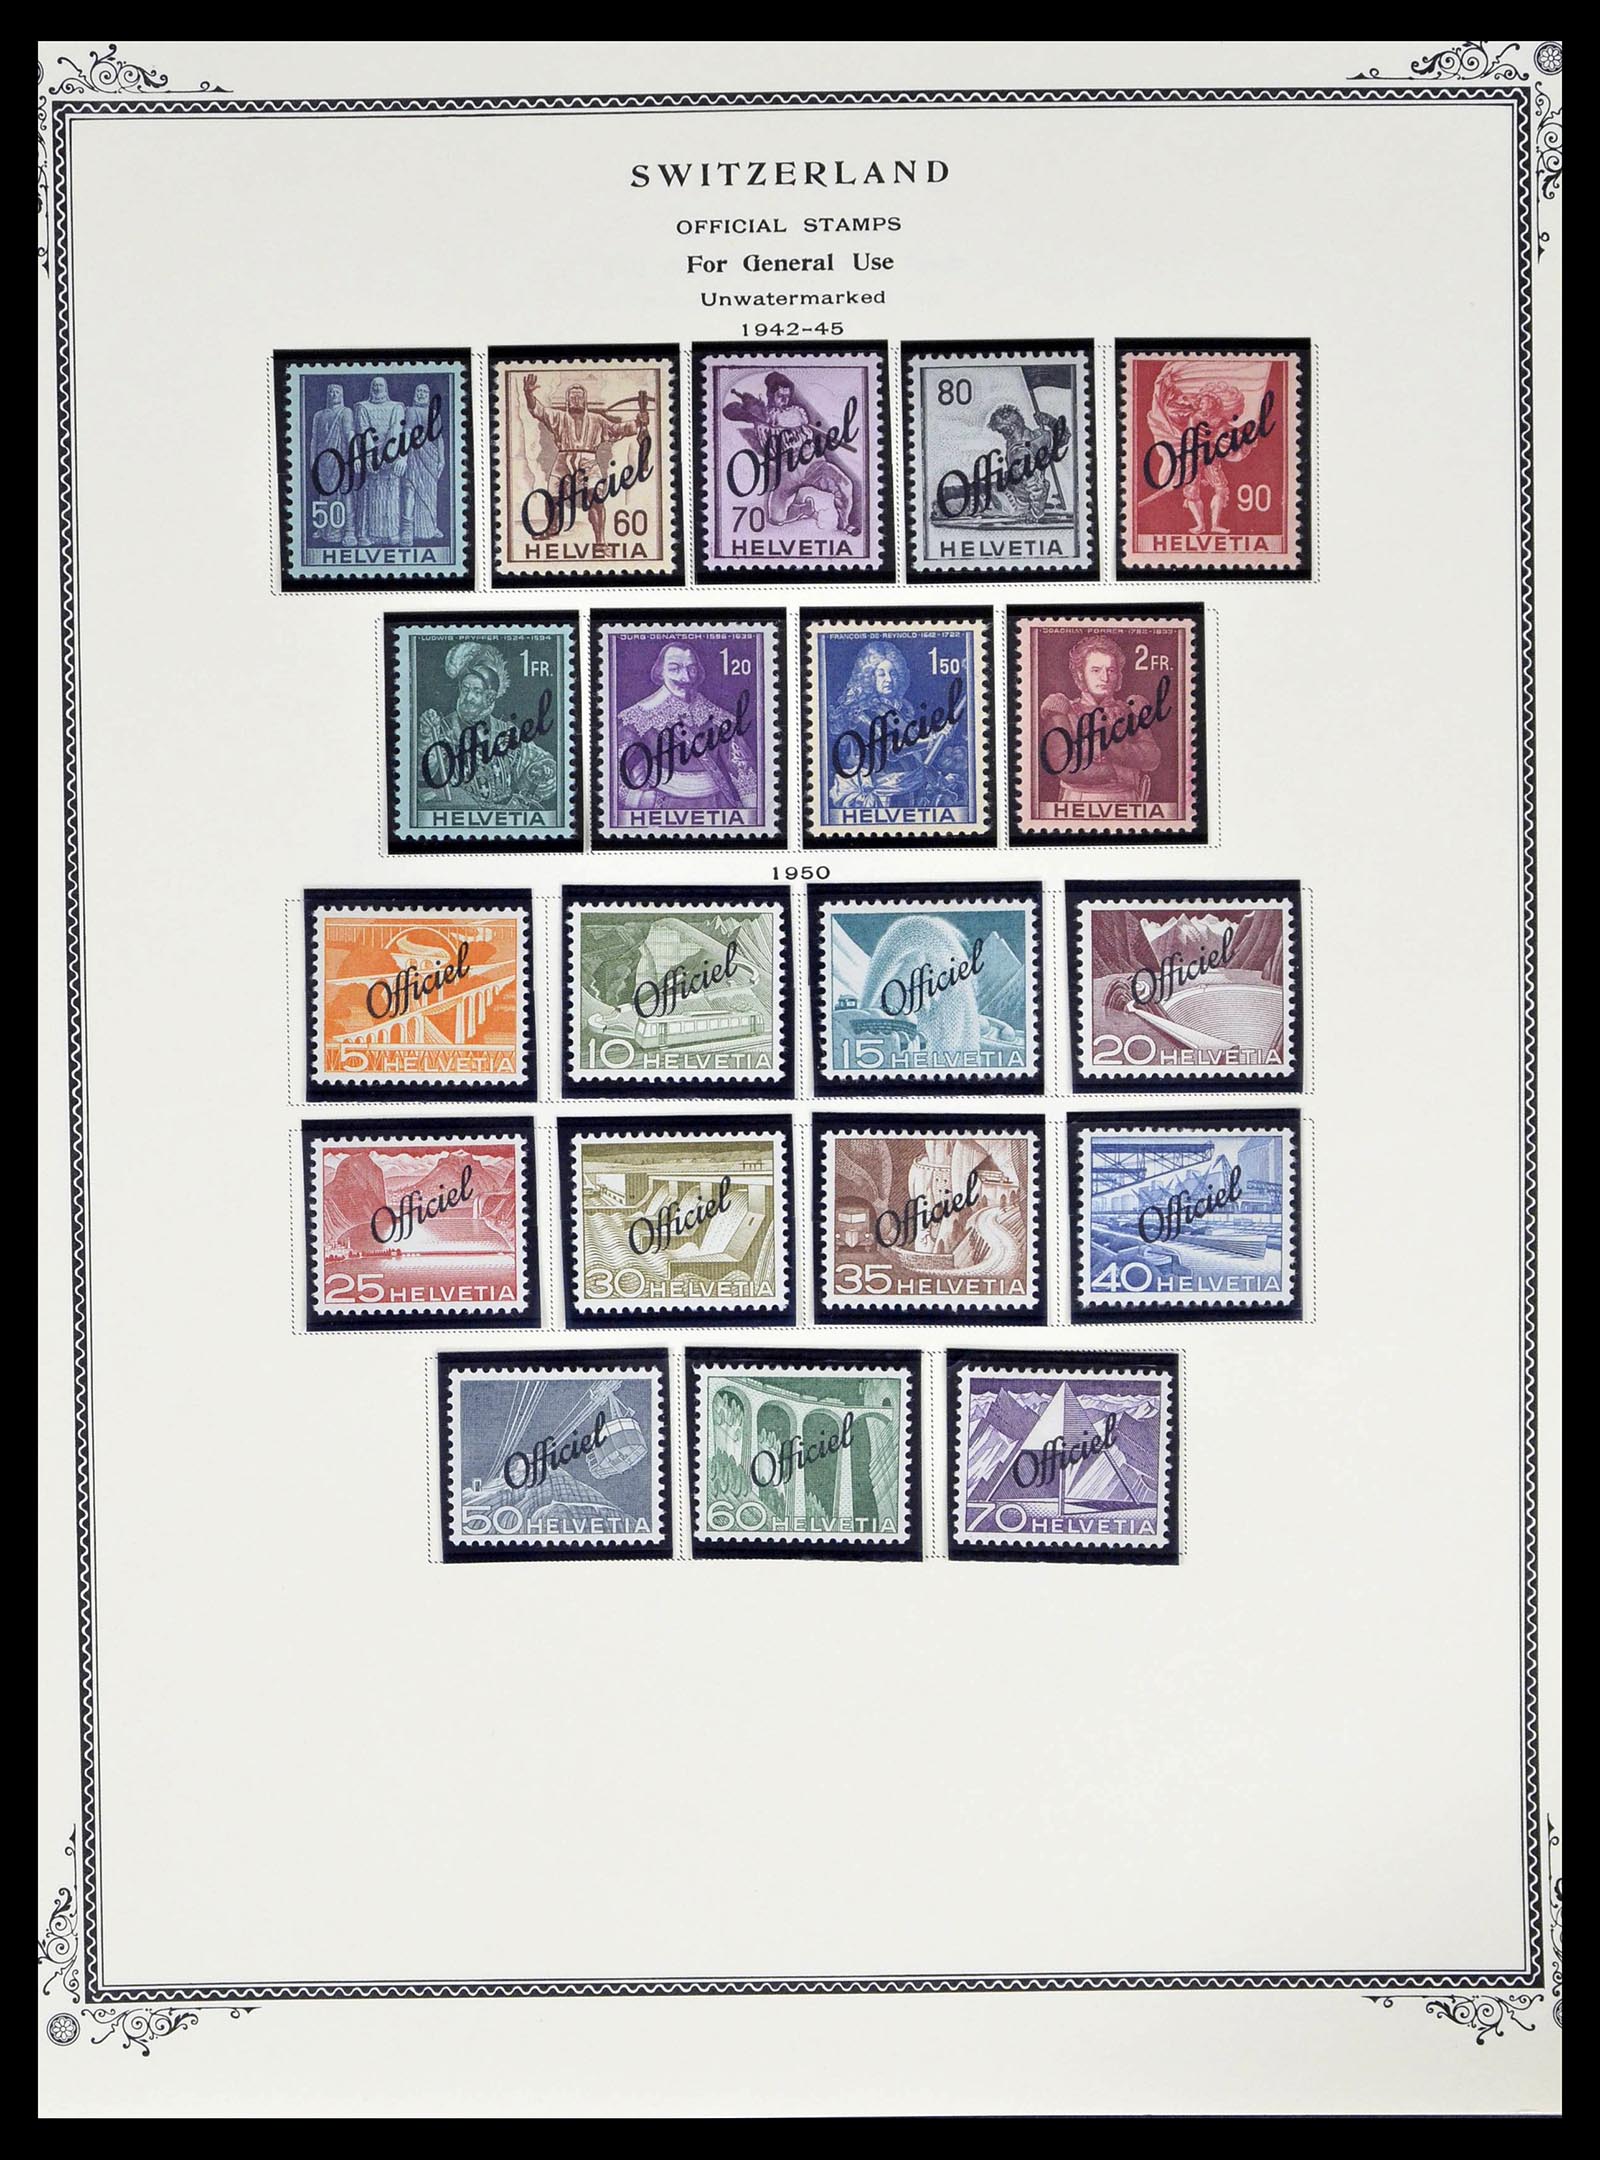 39178 0233 - Stamp collection 39178 Switzerland 1850-1989.